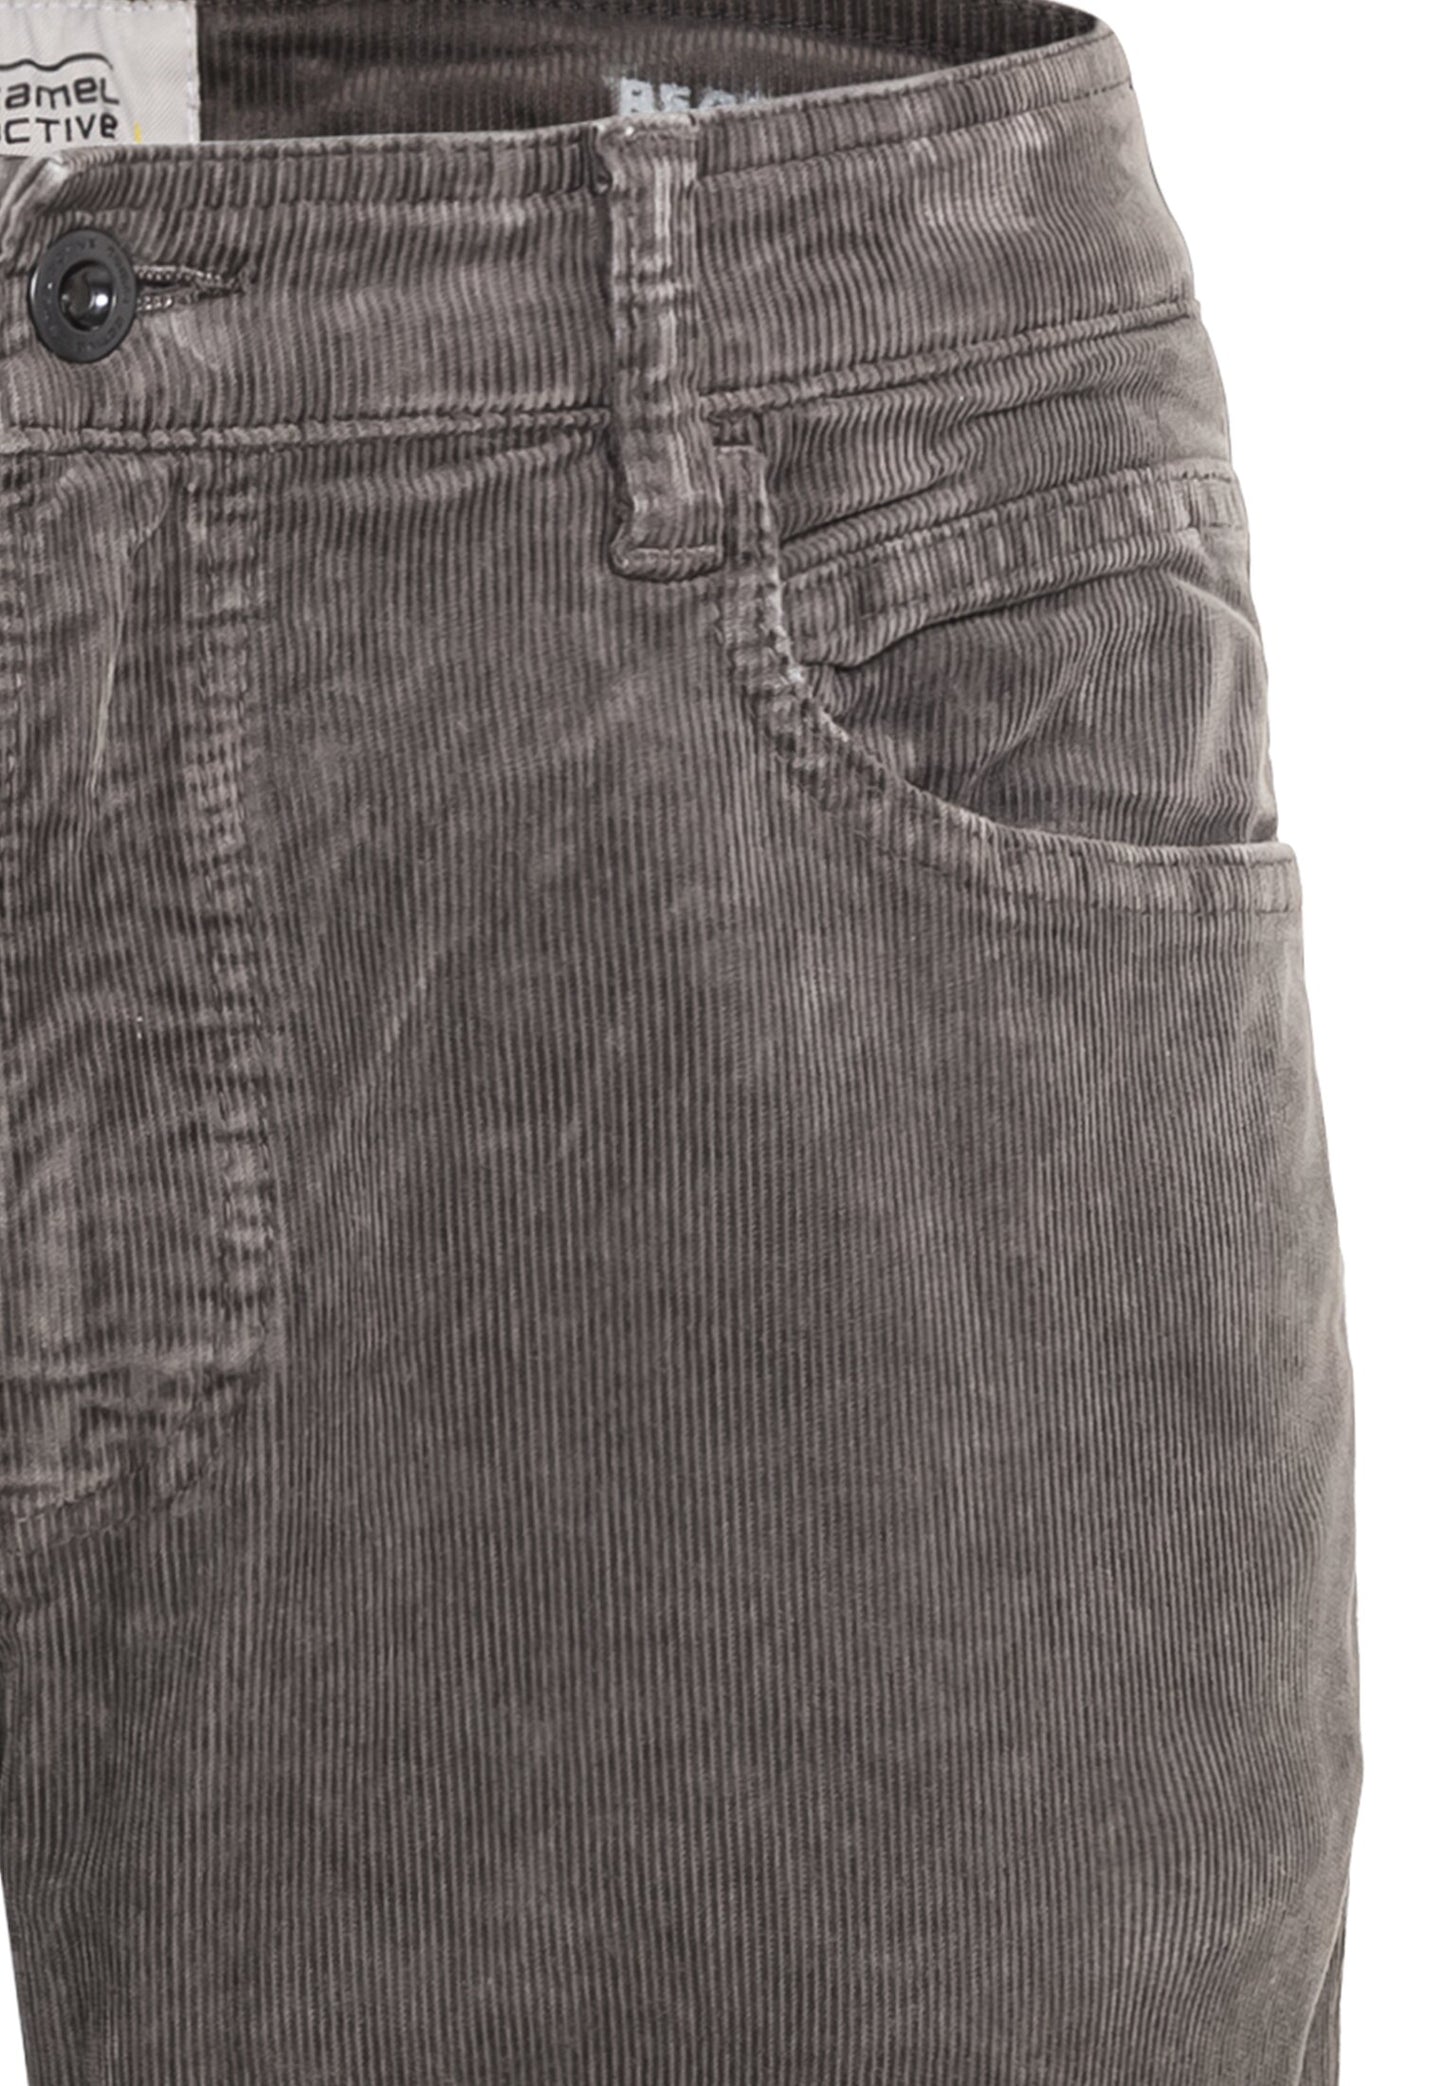 5-Pocket Hose in Regular Fit (Graphite Gray)